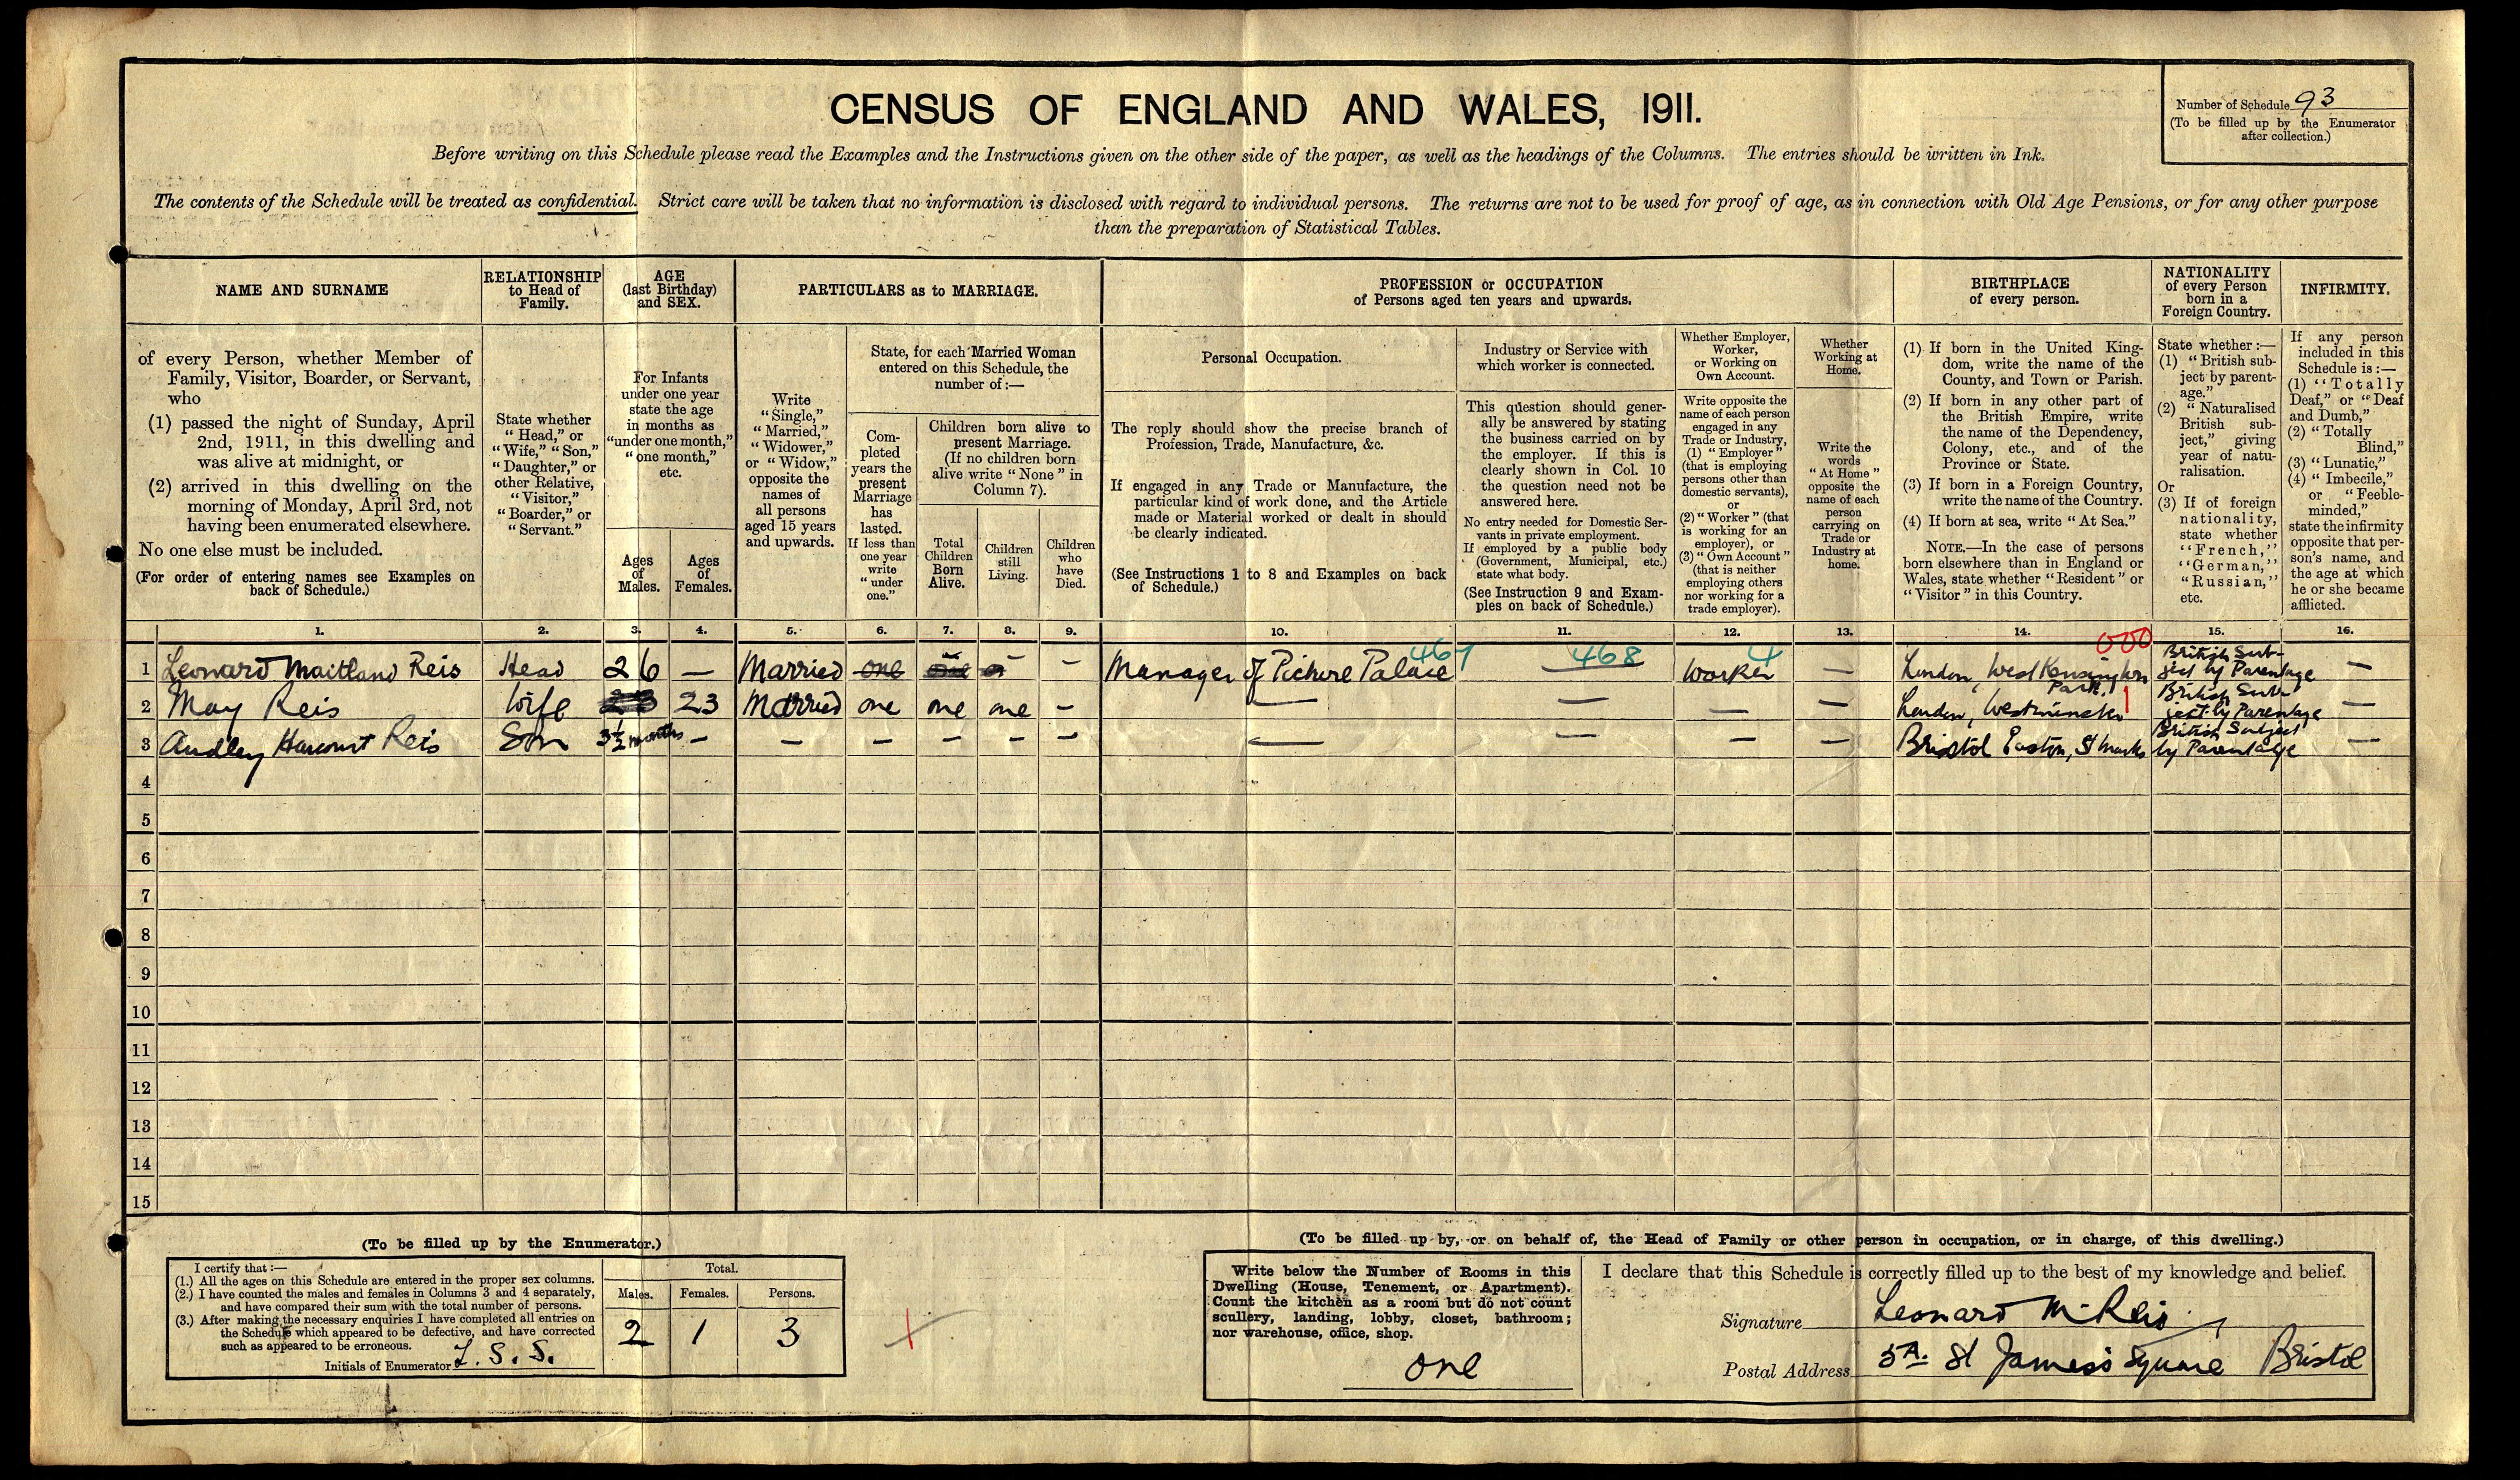 Leonard Maitland Reis 1911 census